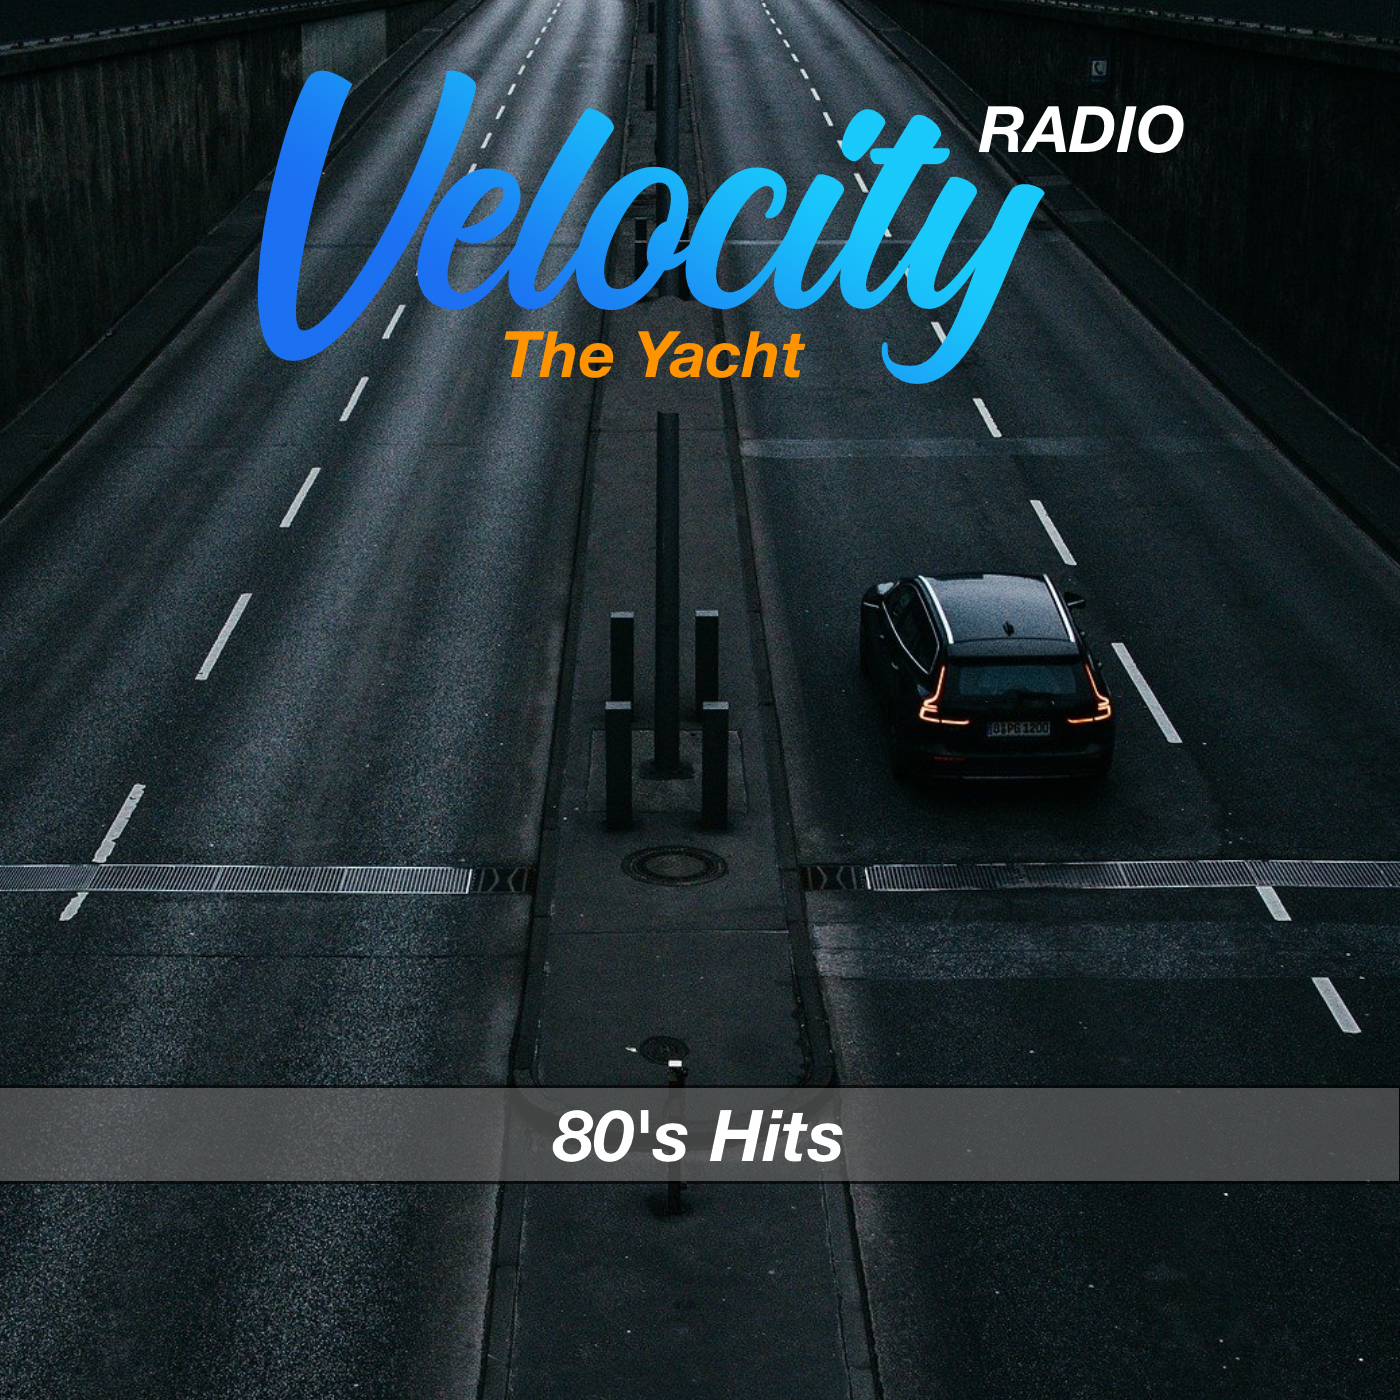 Velocity Radio - The Yacht